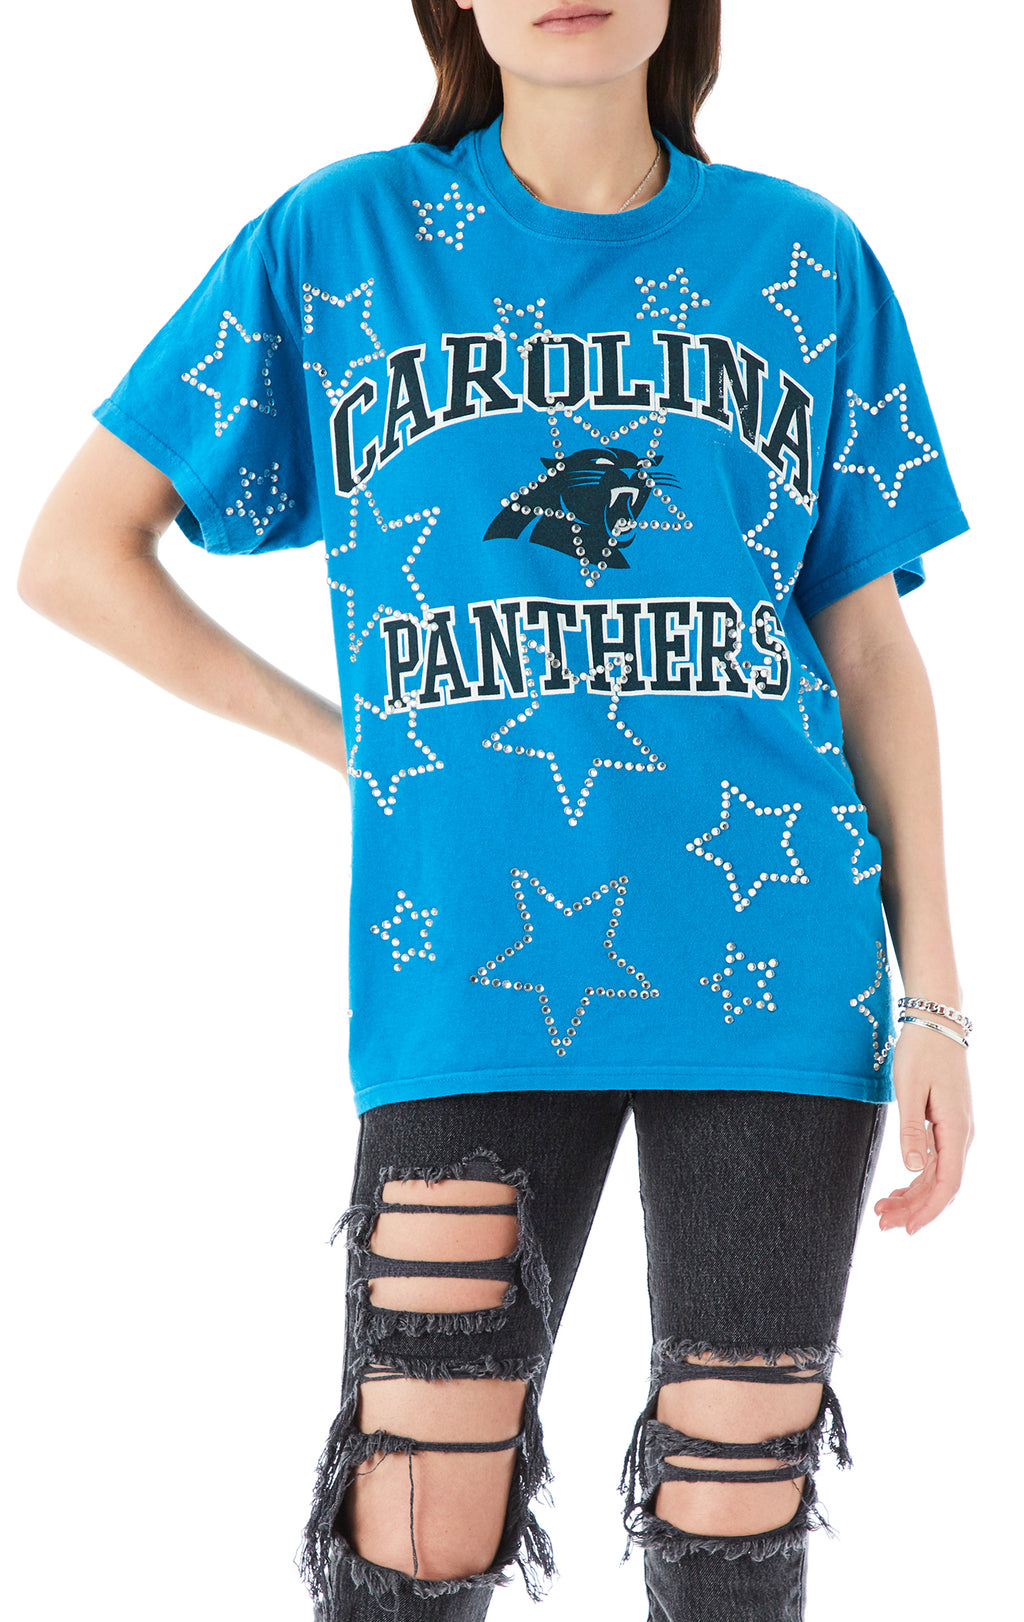 carolina panthers bling shirt